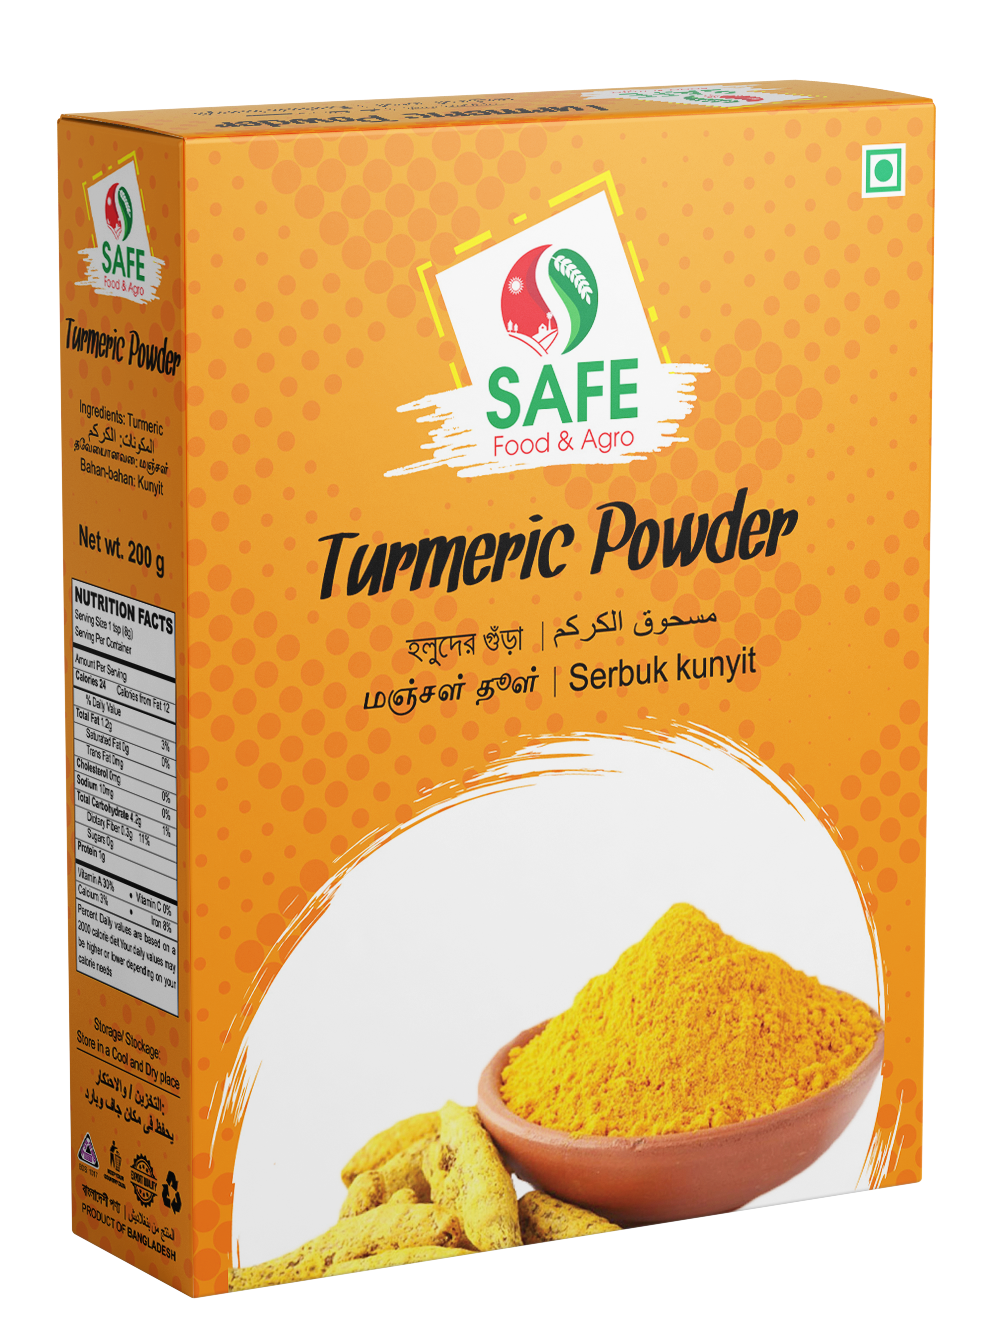 Turmeric Powder Box